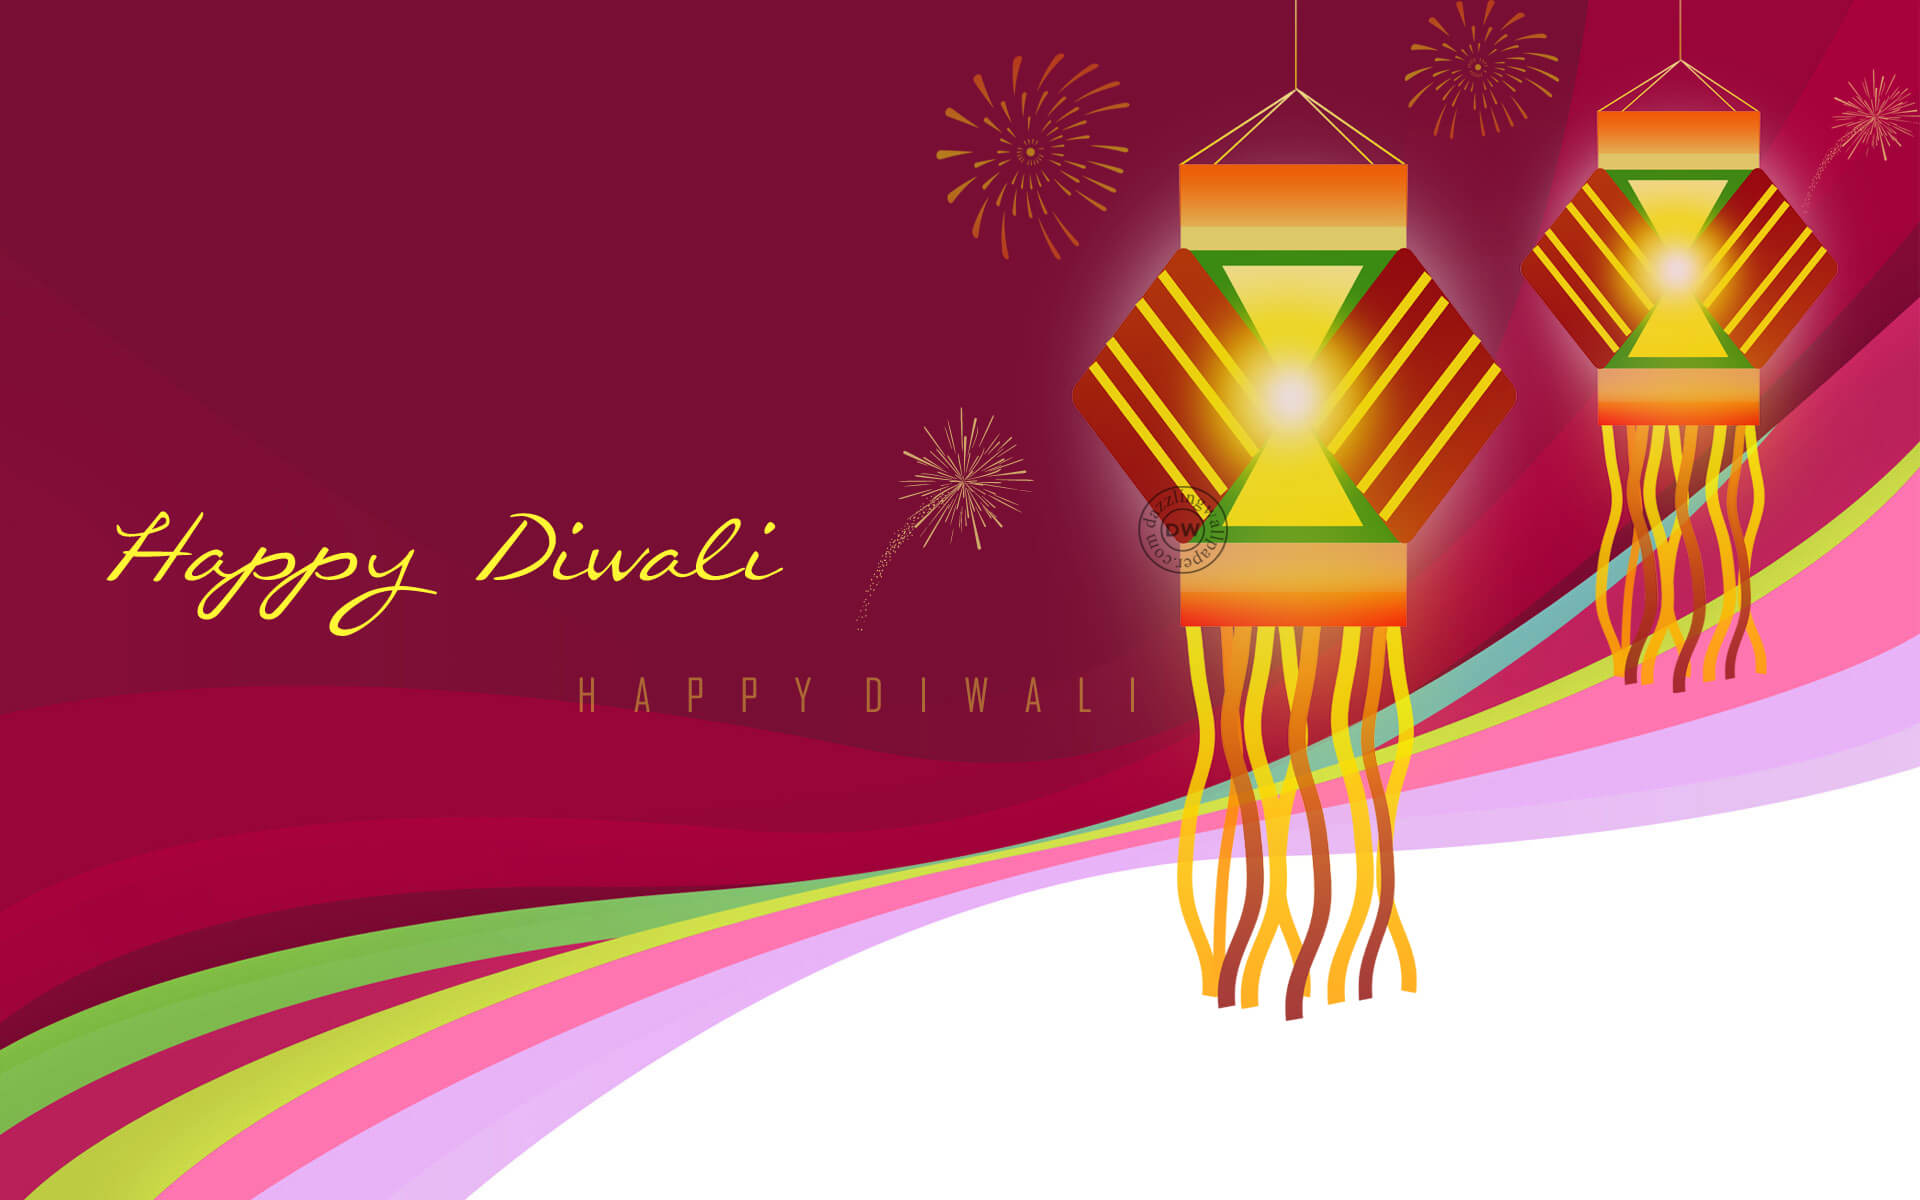 Download-Happy-Diwali-2015-HD-Wallpapers-facebook-mobile-desktop-cgfrog-27